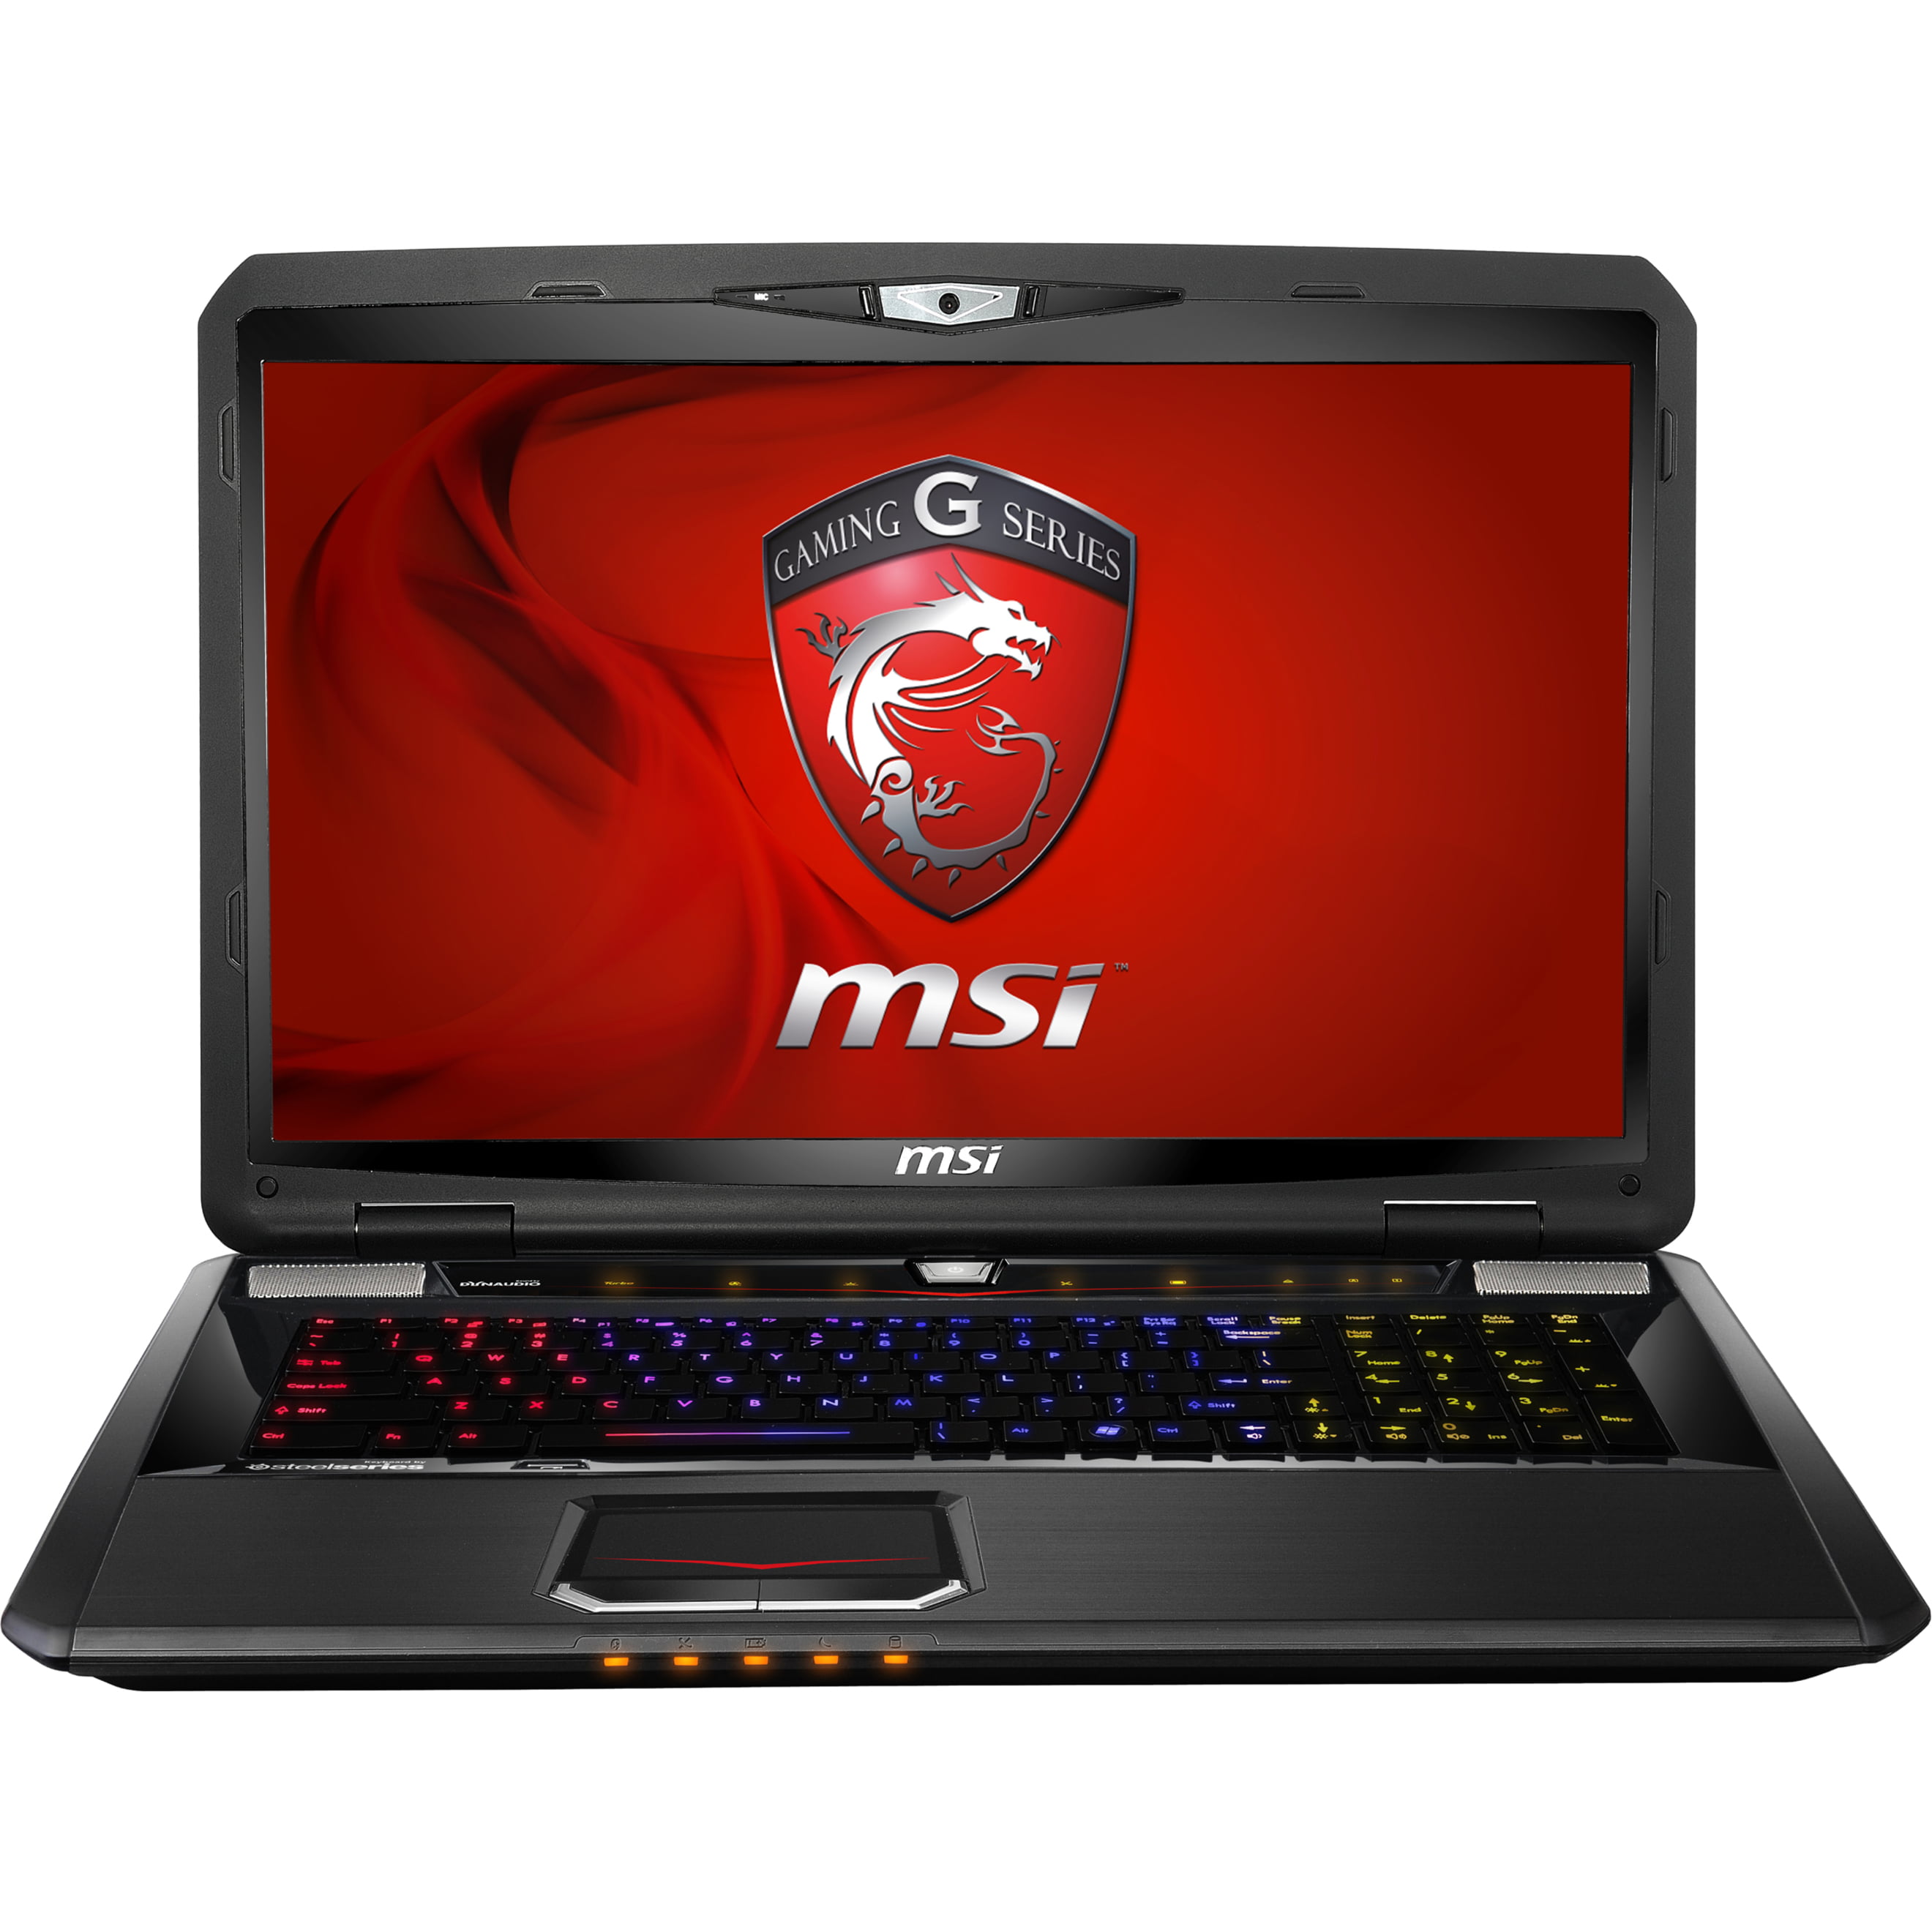 Product msi. Ноутбук MSI gt70 Dominator. Ноутбук MSI gs70 2pe Stealth Pro. MSI gt70 Red Dragon. Ноутбук MSI ge60 0nc.